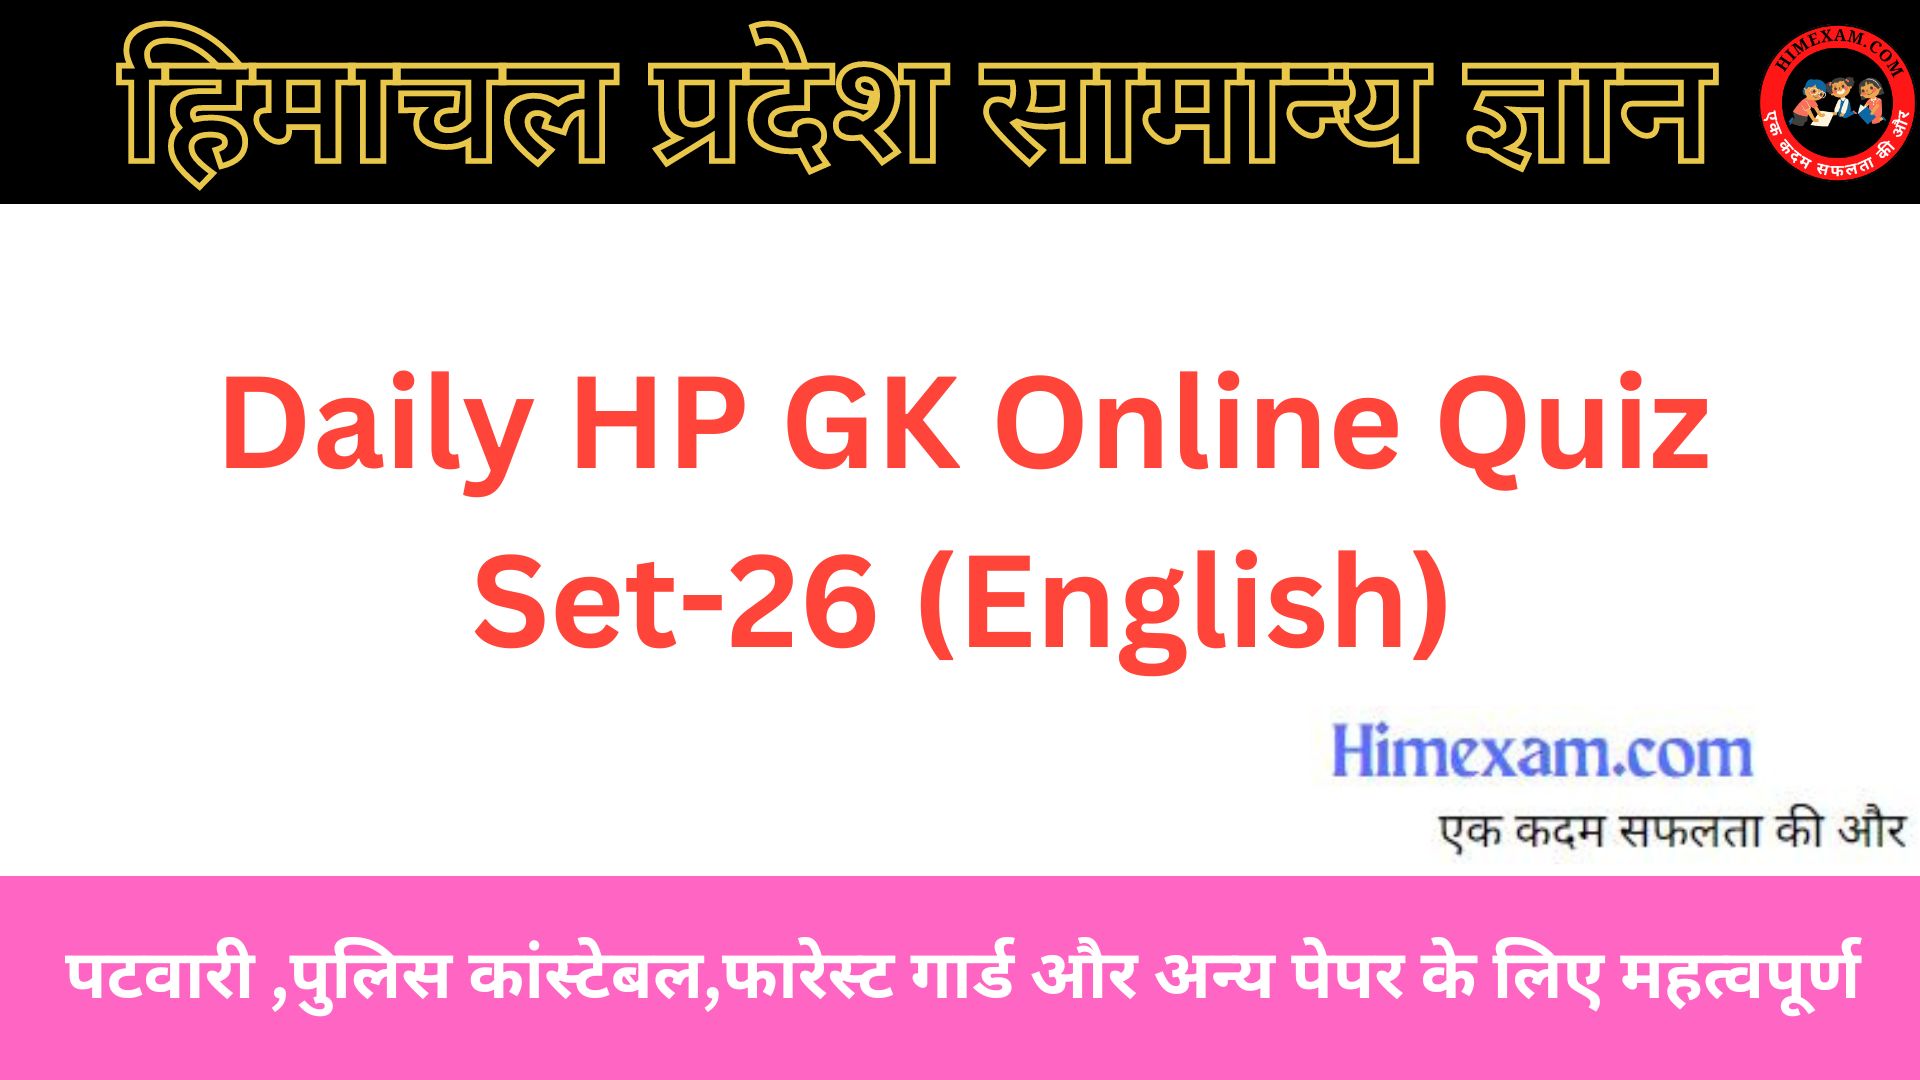 Daily HP GK Online Quiz Set-26 (English)